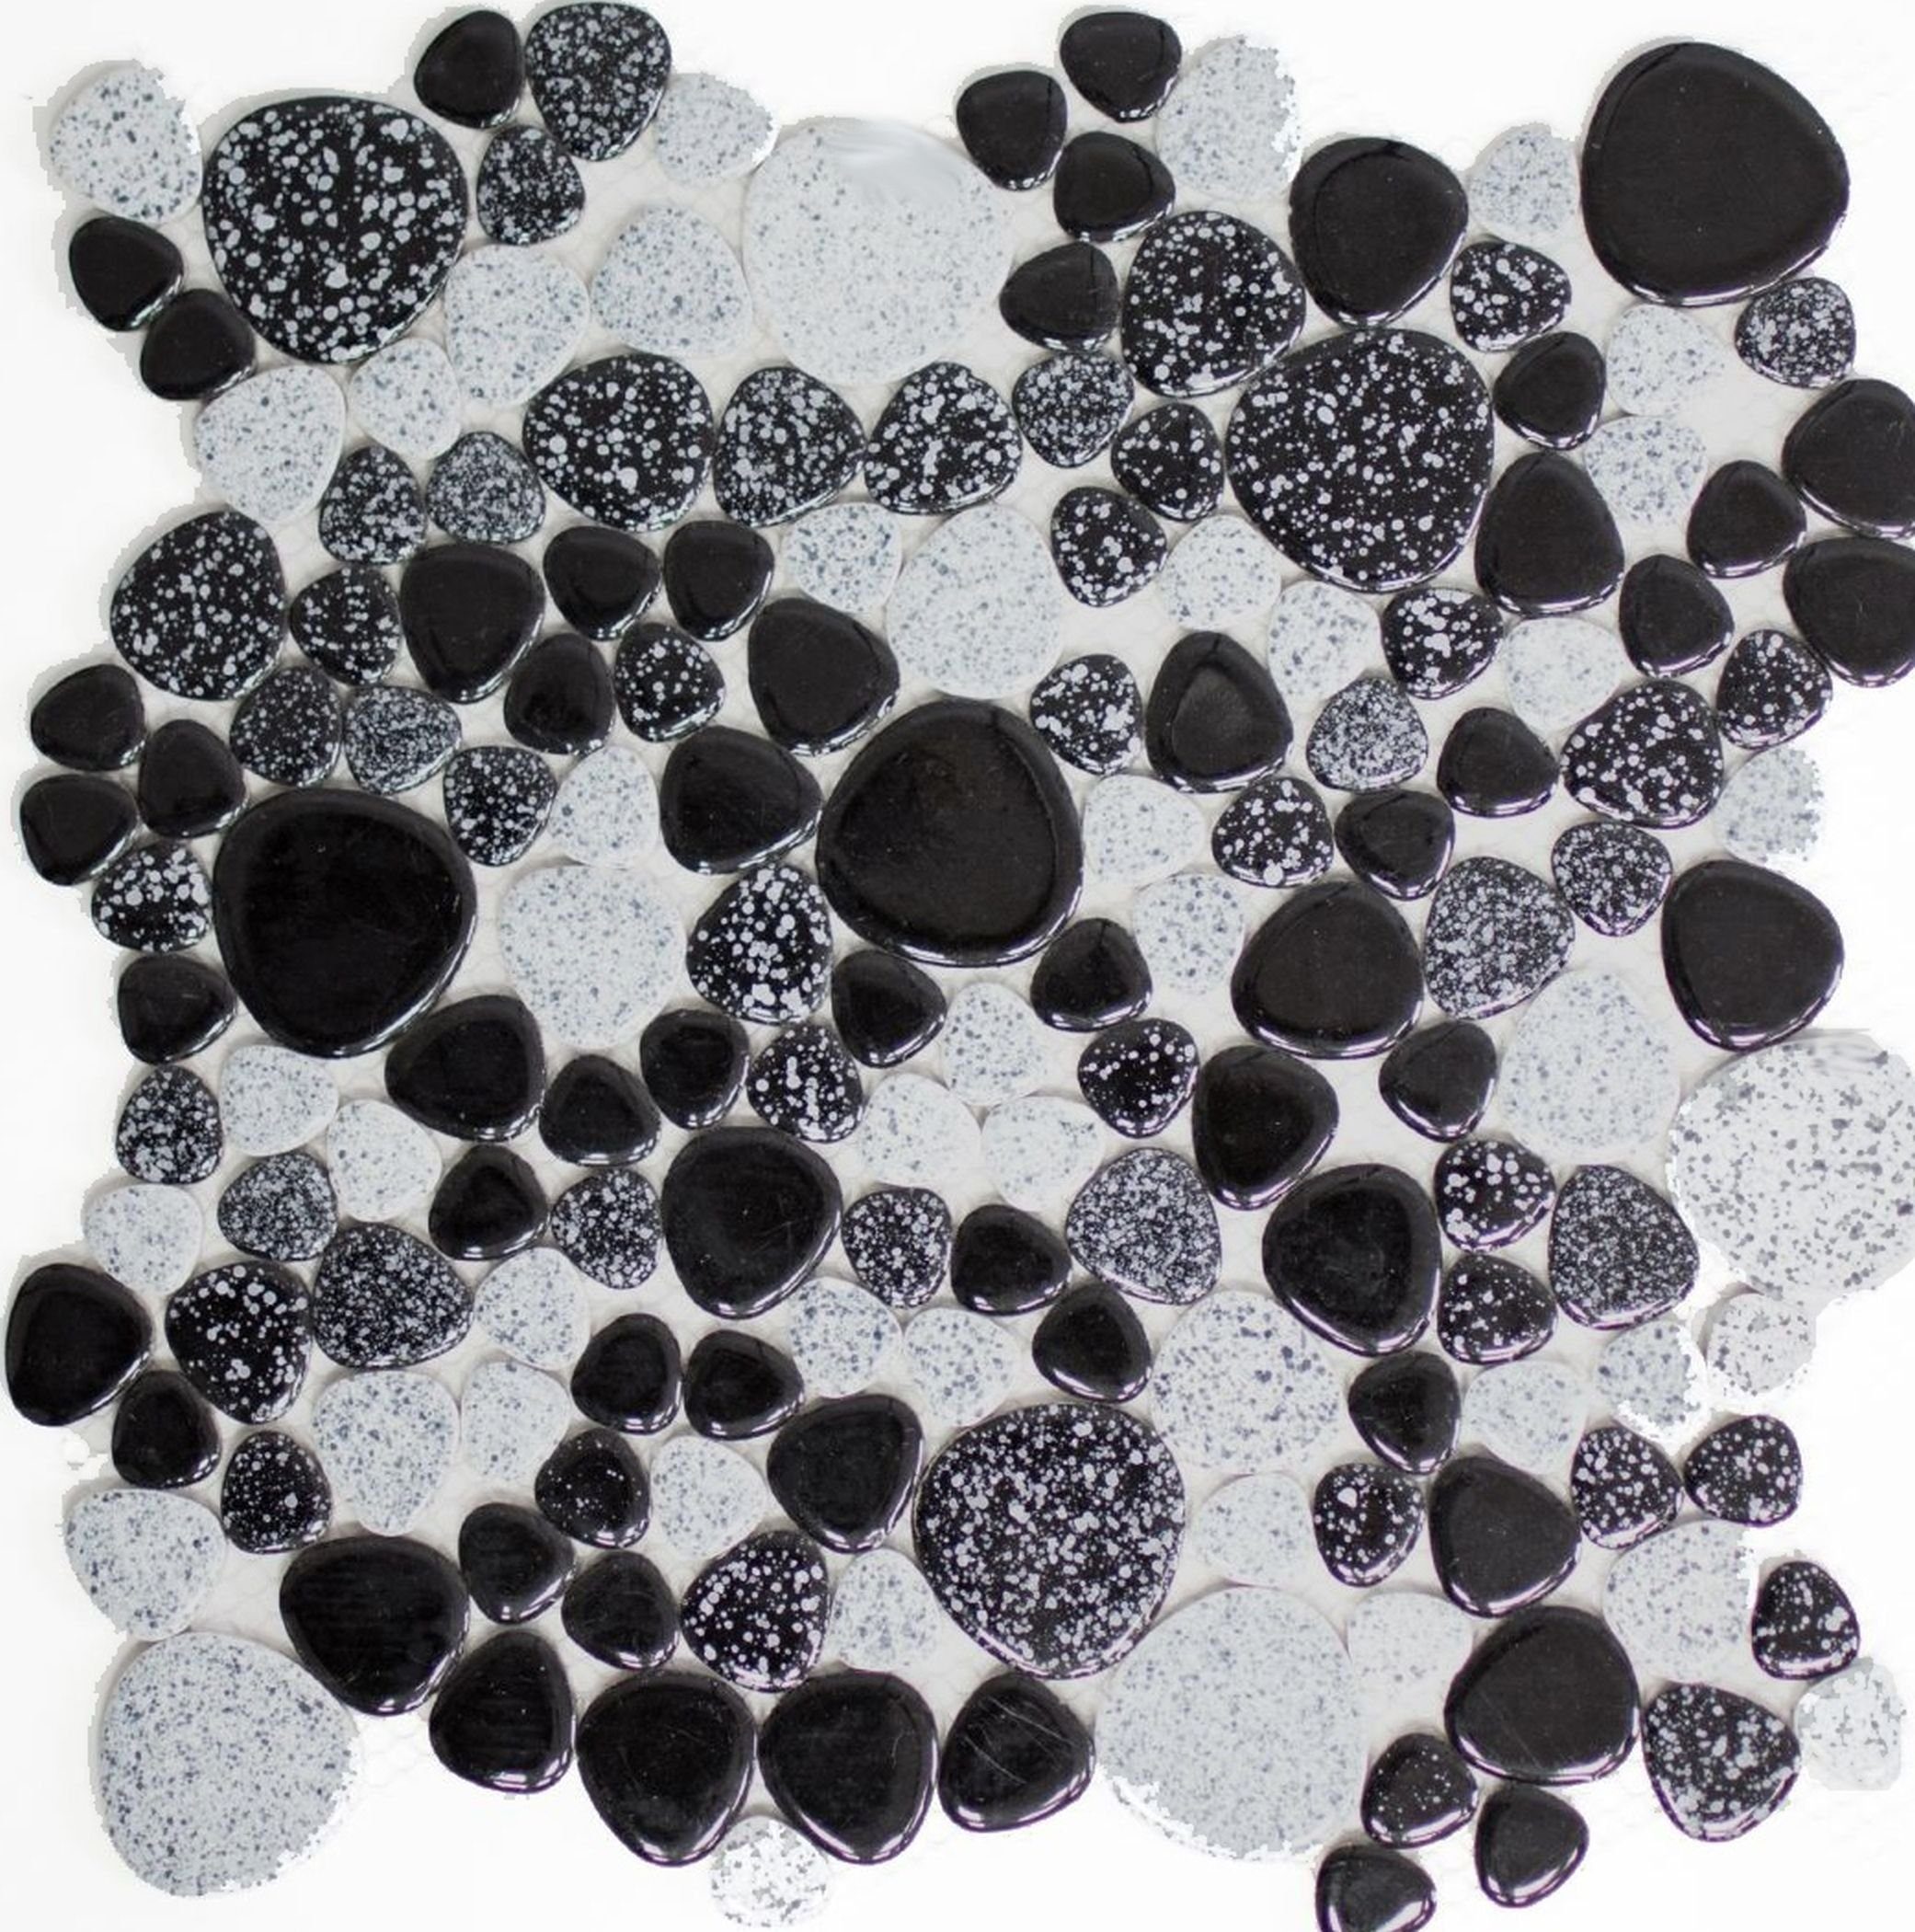 Mosani Mosaikfliesen Oval Keramikmosaik Mosaikfliesen mix weiß schwarz glänzend / 10 Matten